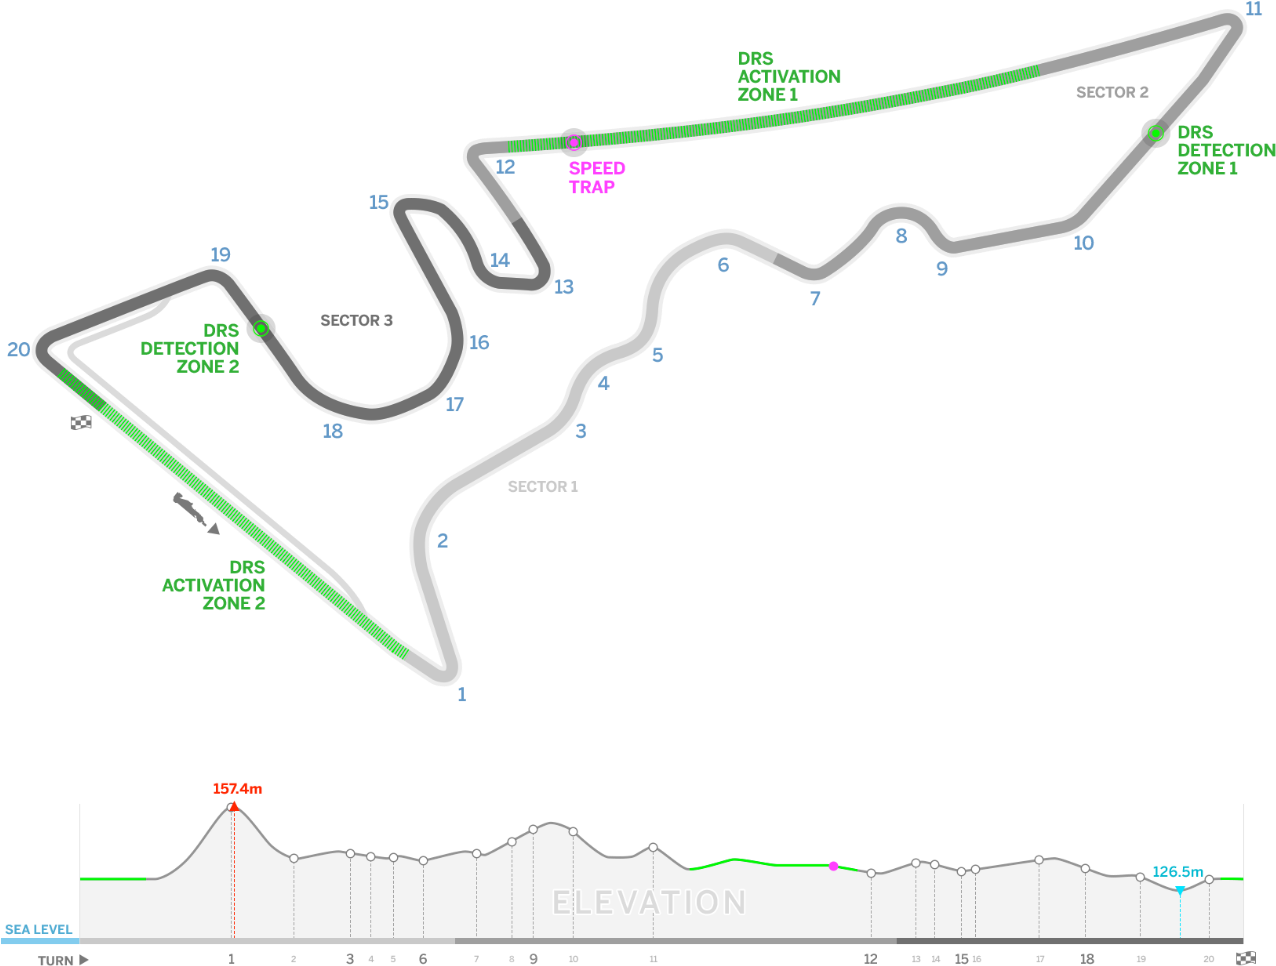 F1 Track Layoutand Elevation Profile